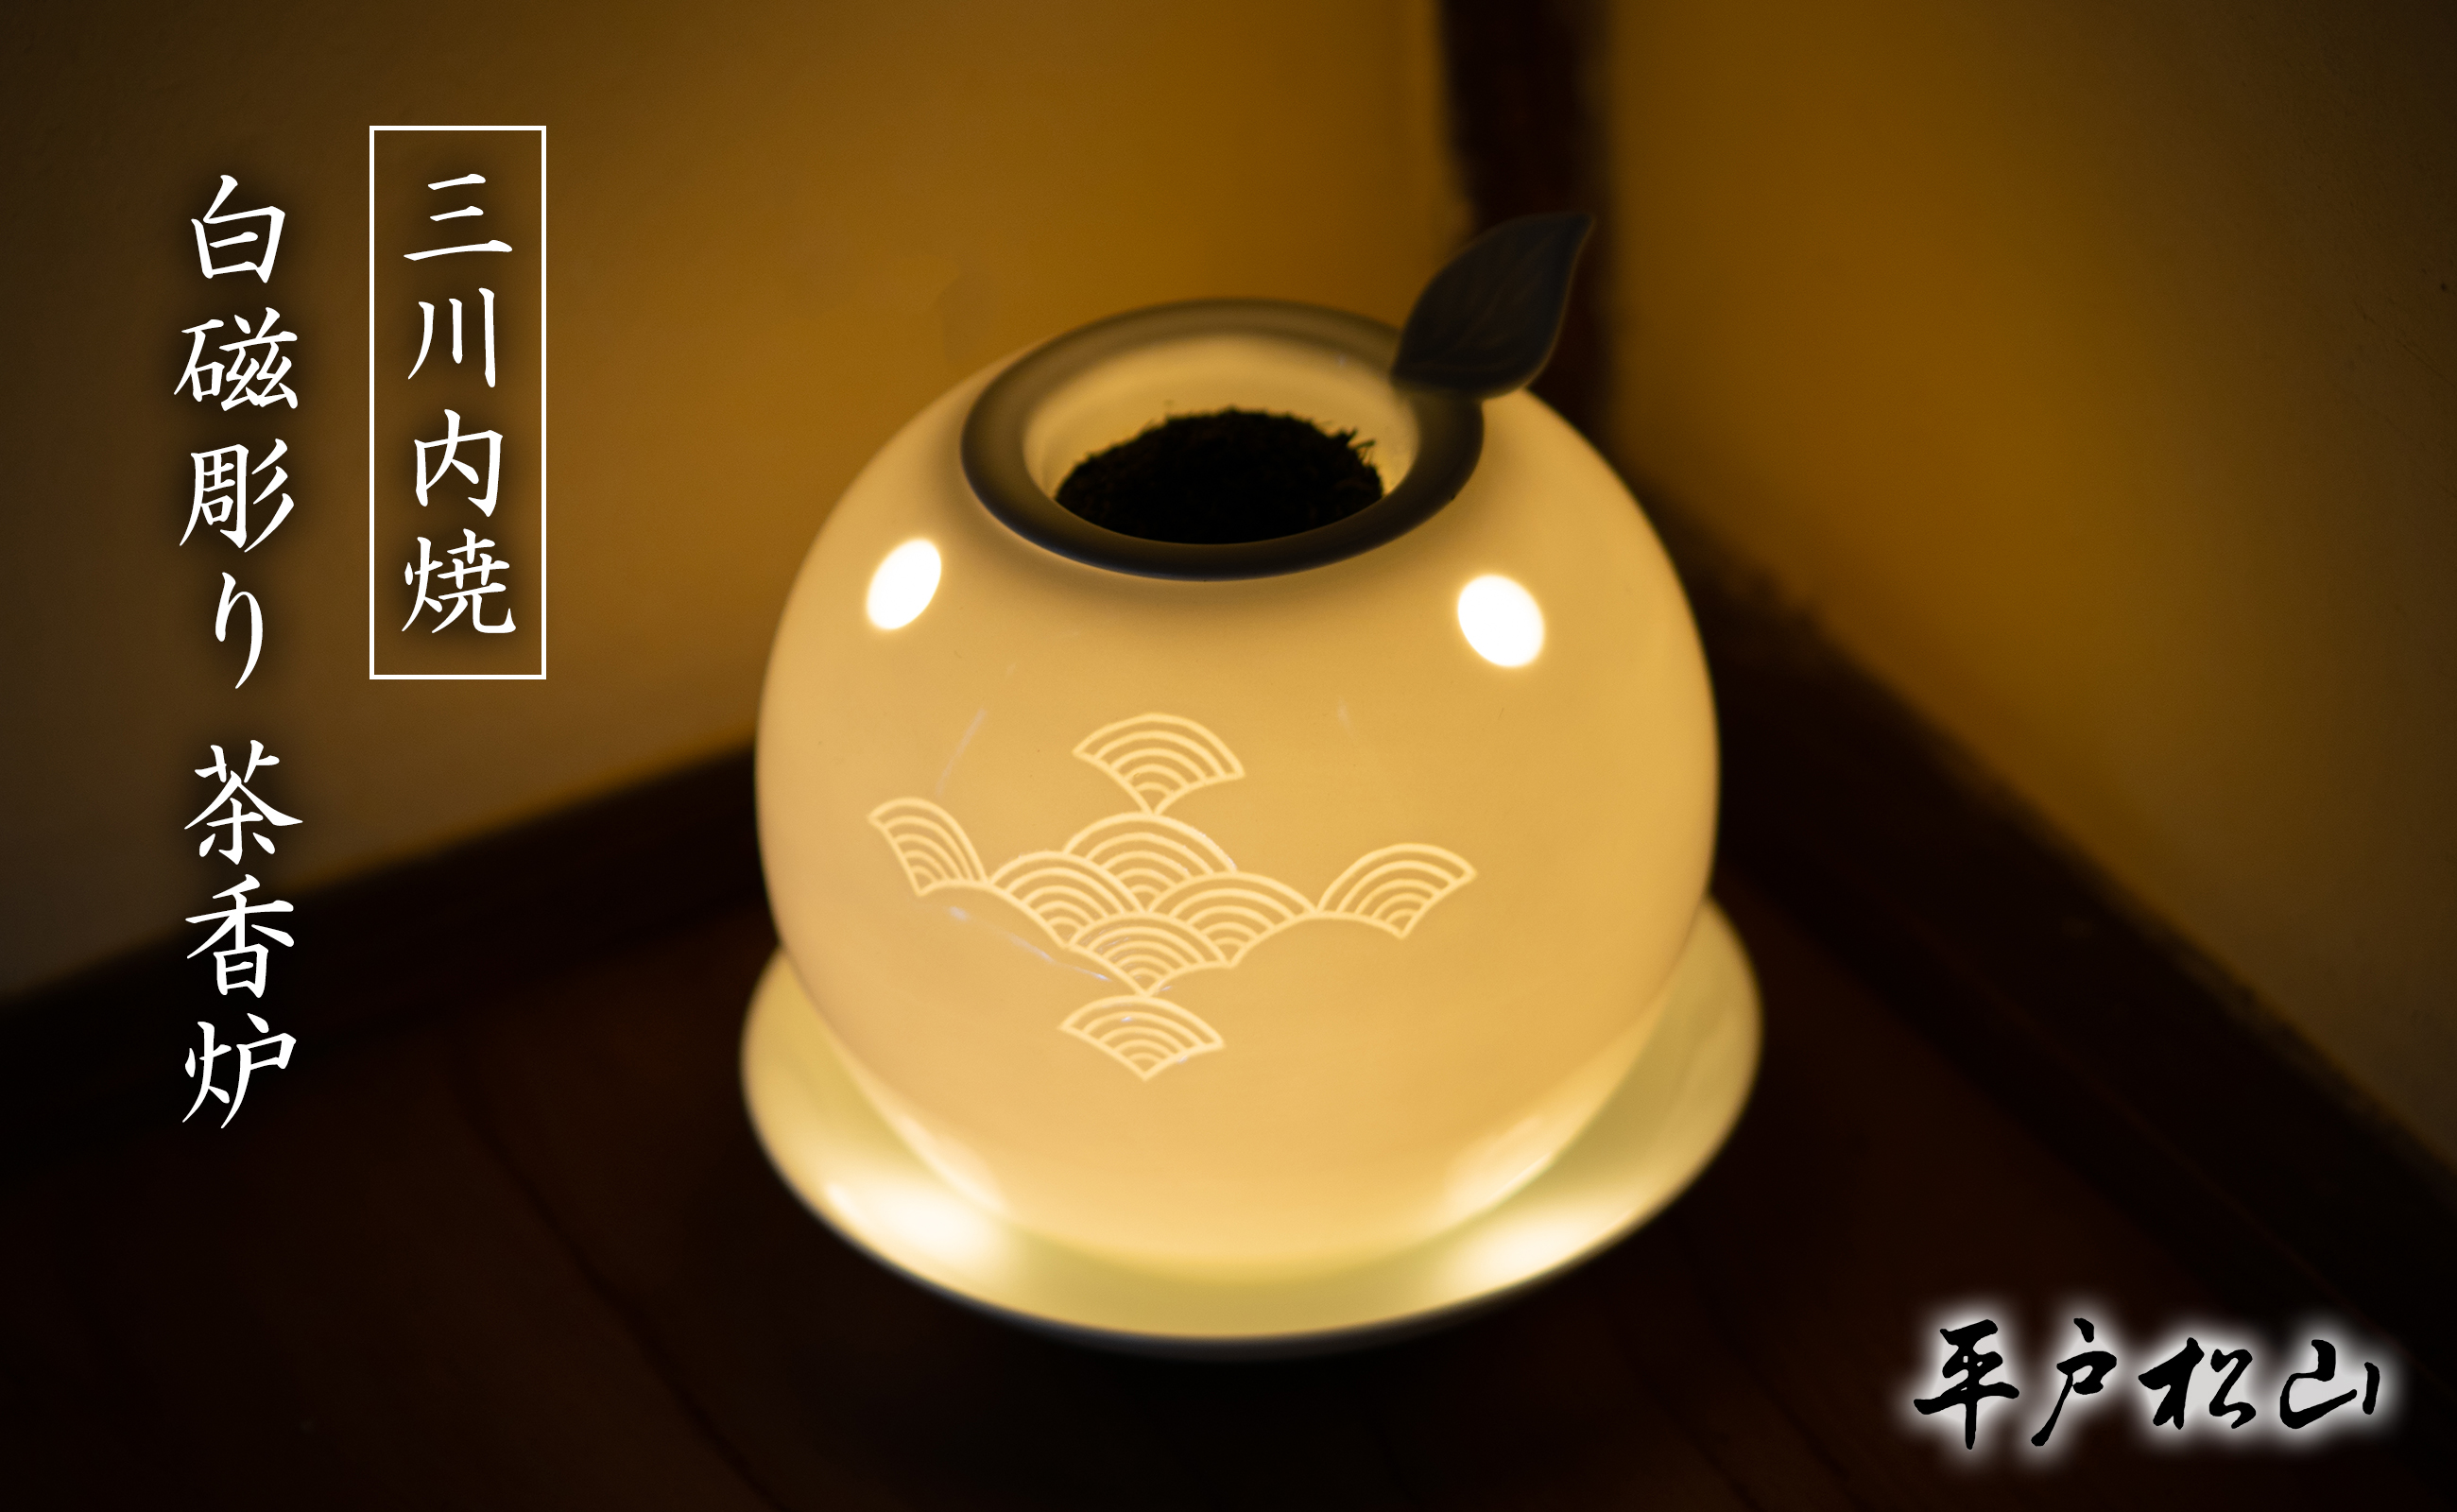 〈平戸松山窯〉白磁彫り 茶香炉 1個 (世知原茶10g･キャンドル1個･説明書付き) 白磁陰刻 